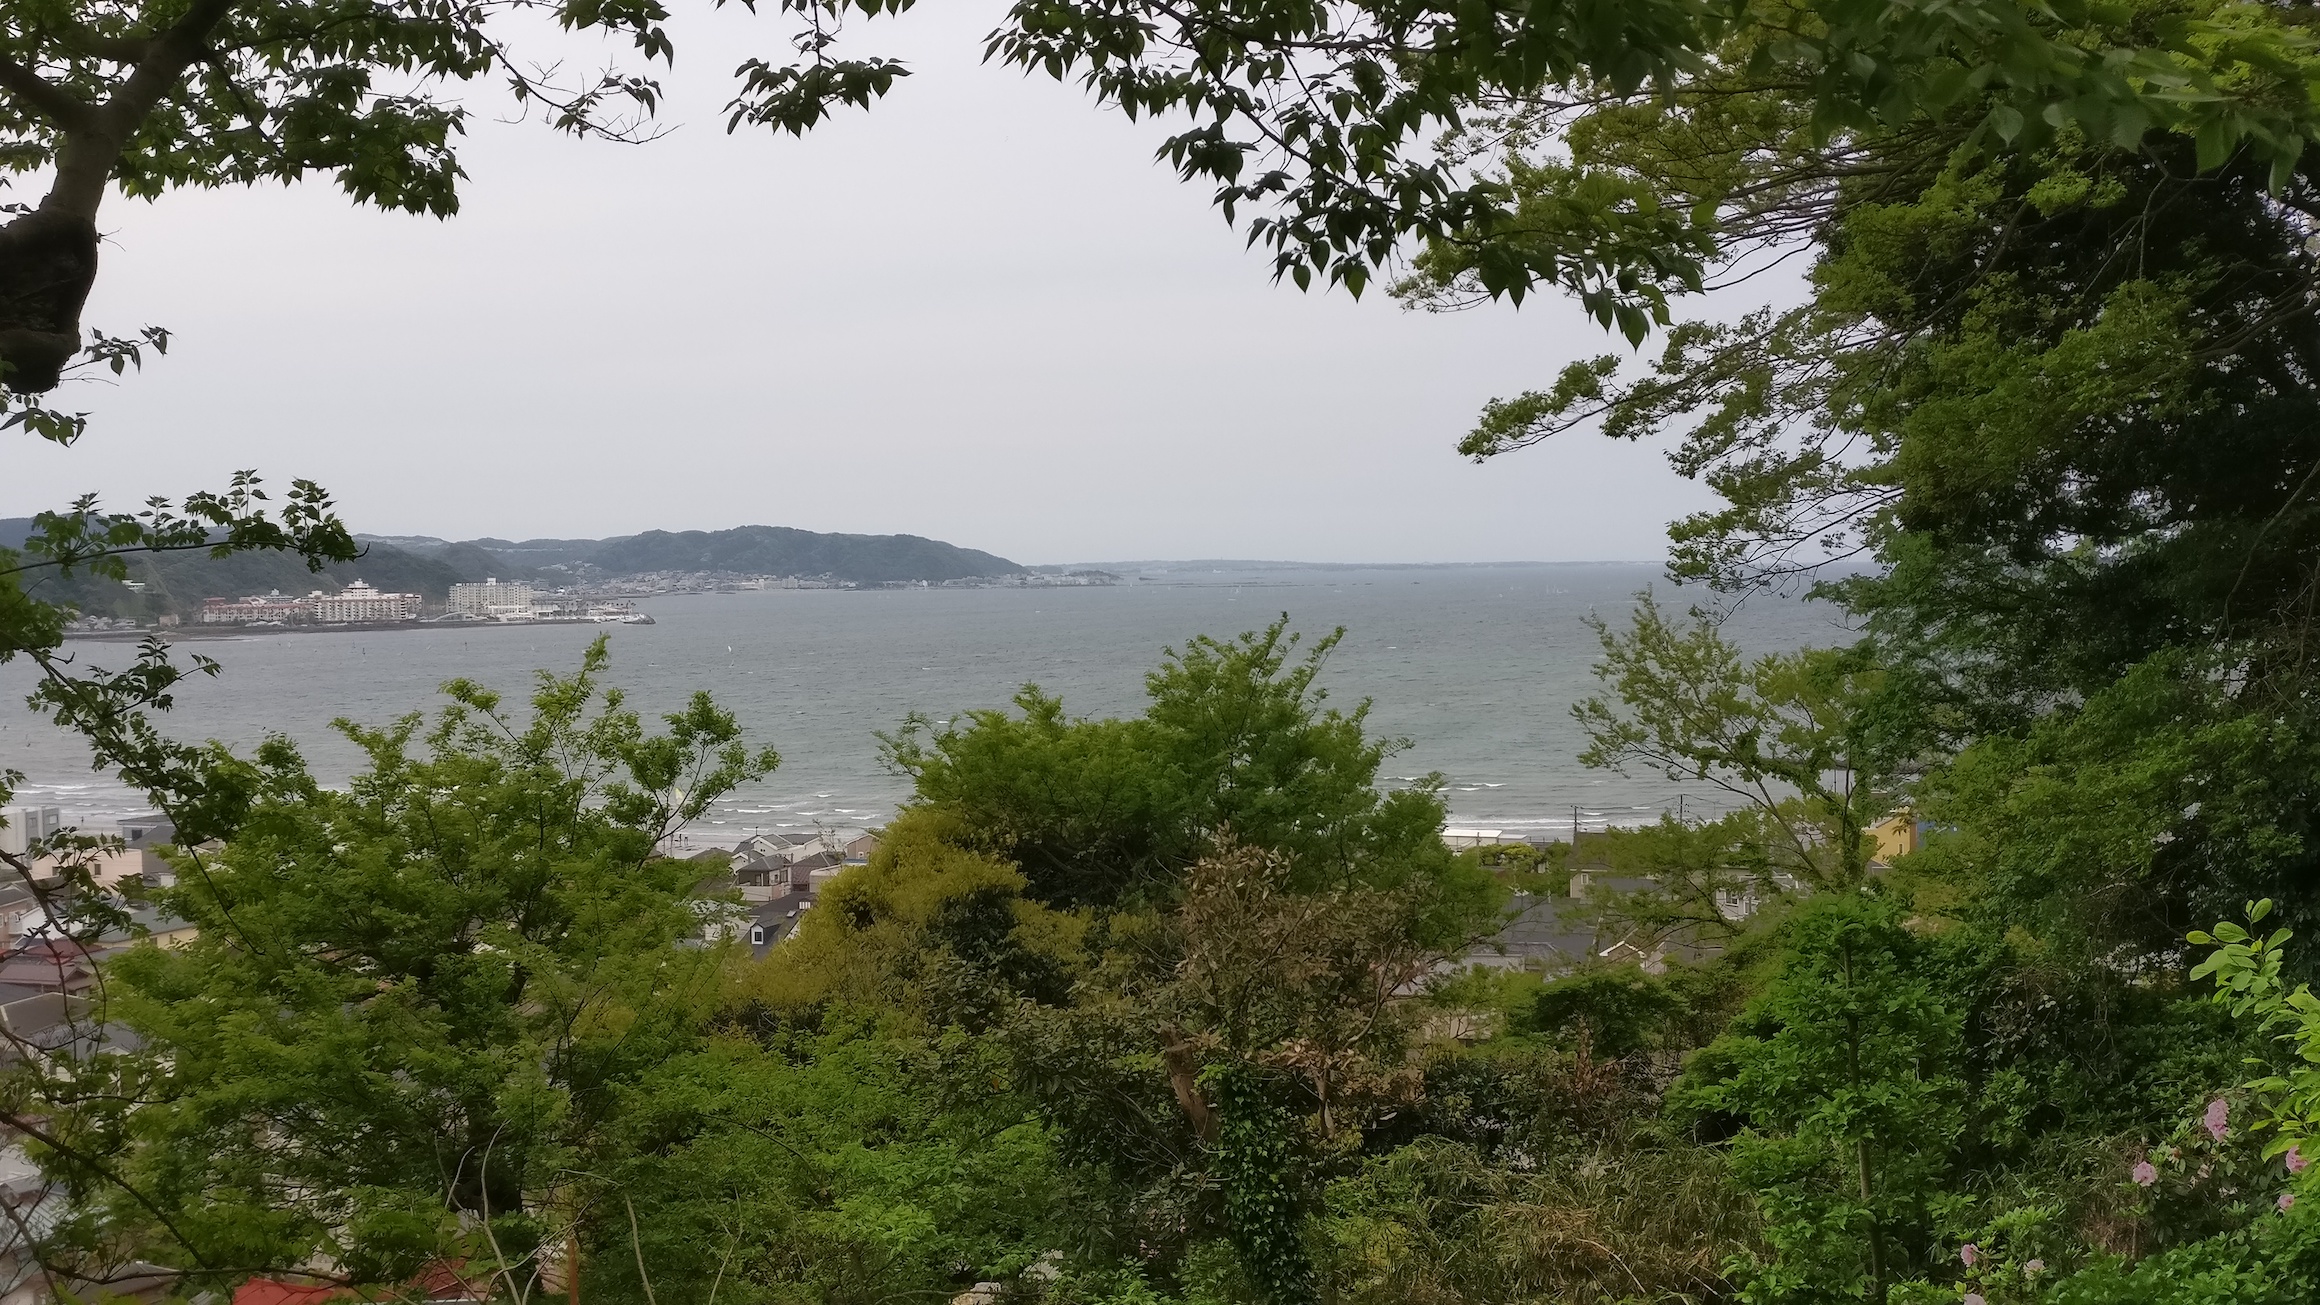 View of coastal Kamakura from the high ground